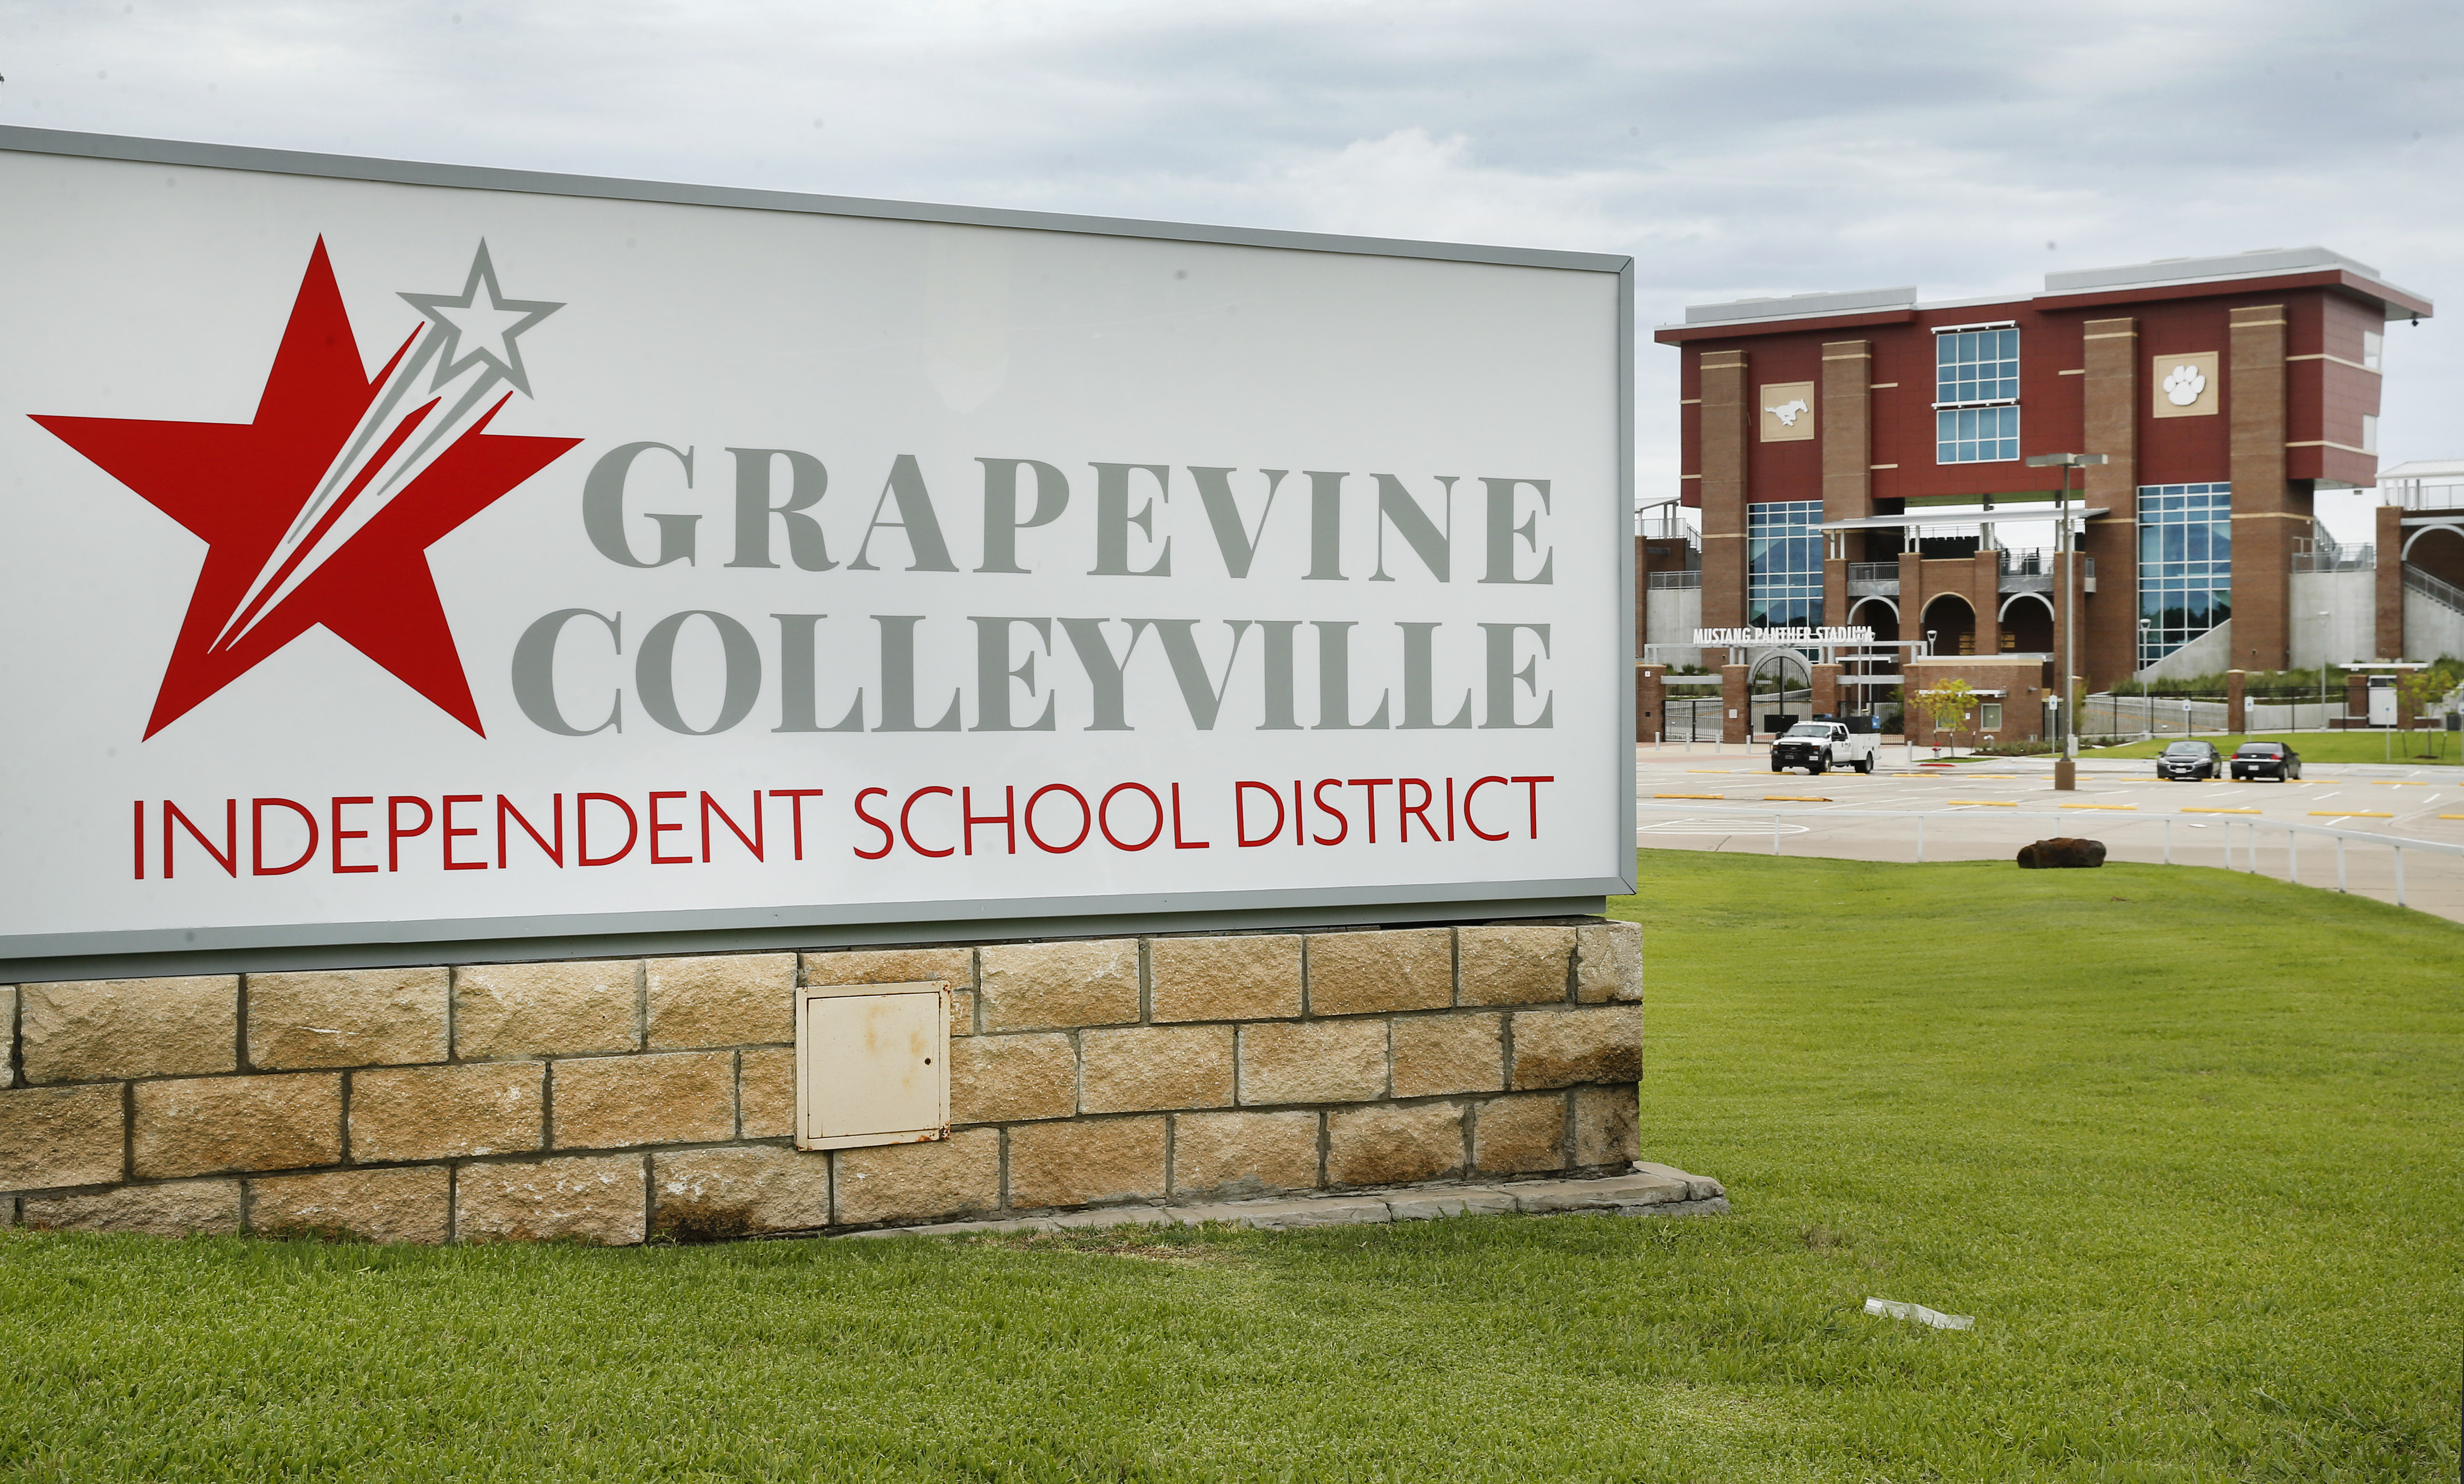 Grapevine-Colleyville Independent School District (GCISD)